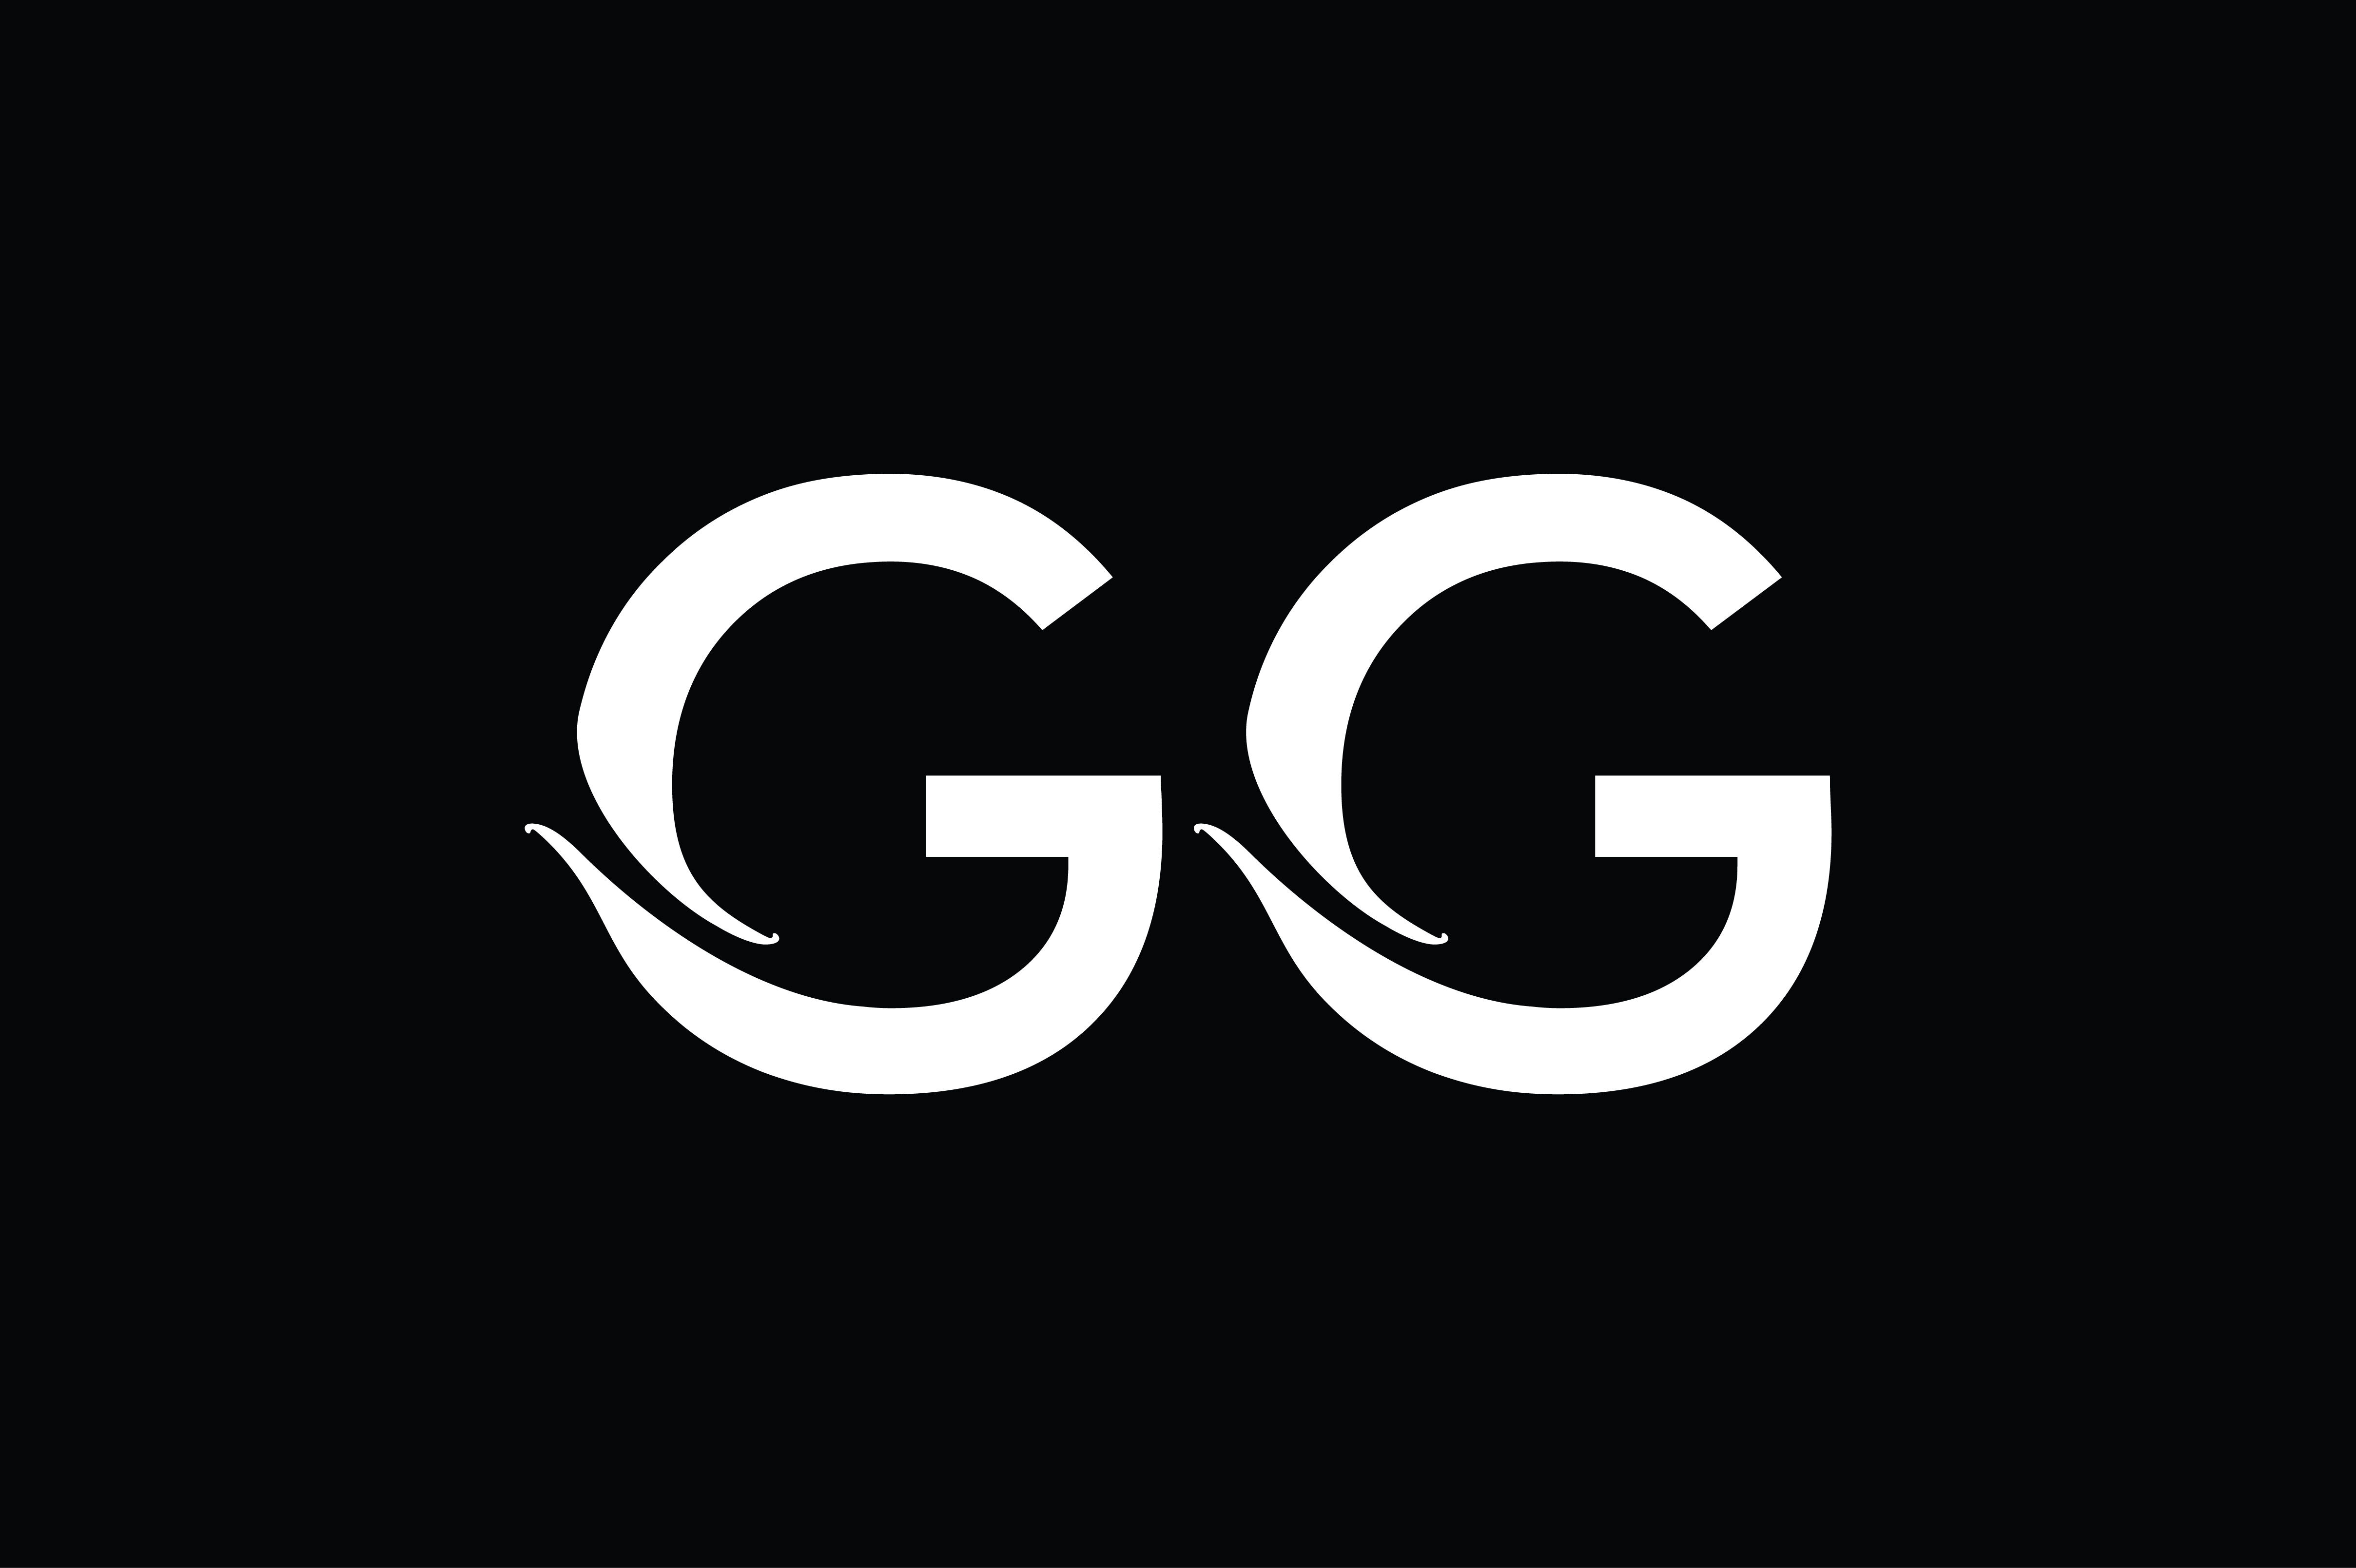 Gg eu. GC лого. Gg значок. Фирменный знак gg. Клан gg.